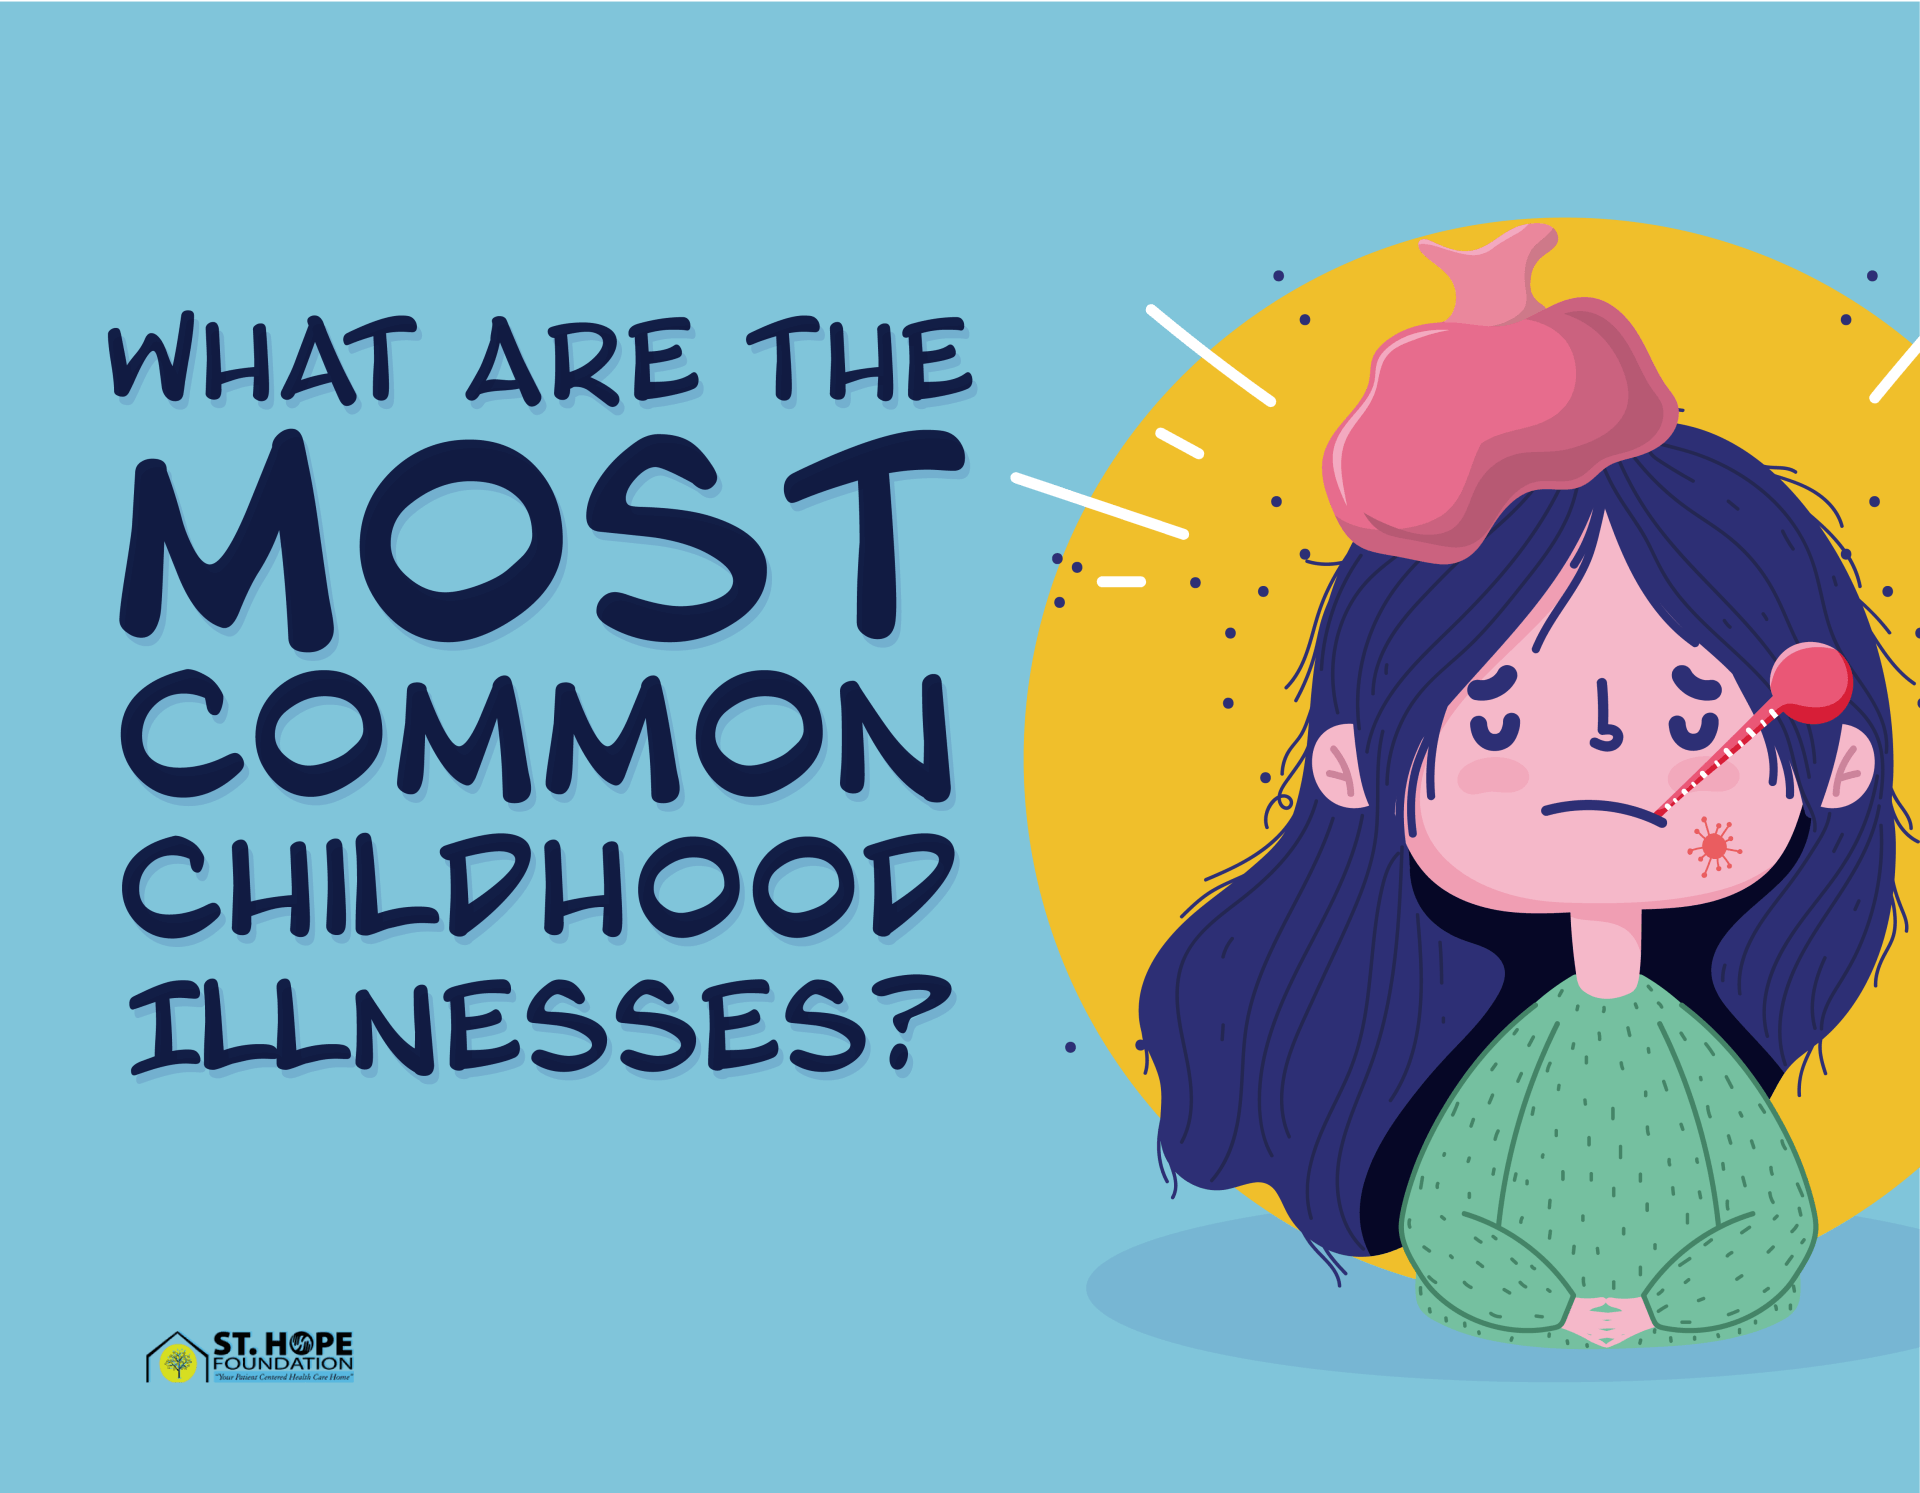 common childhood illnesses